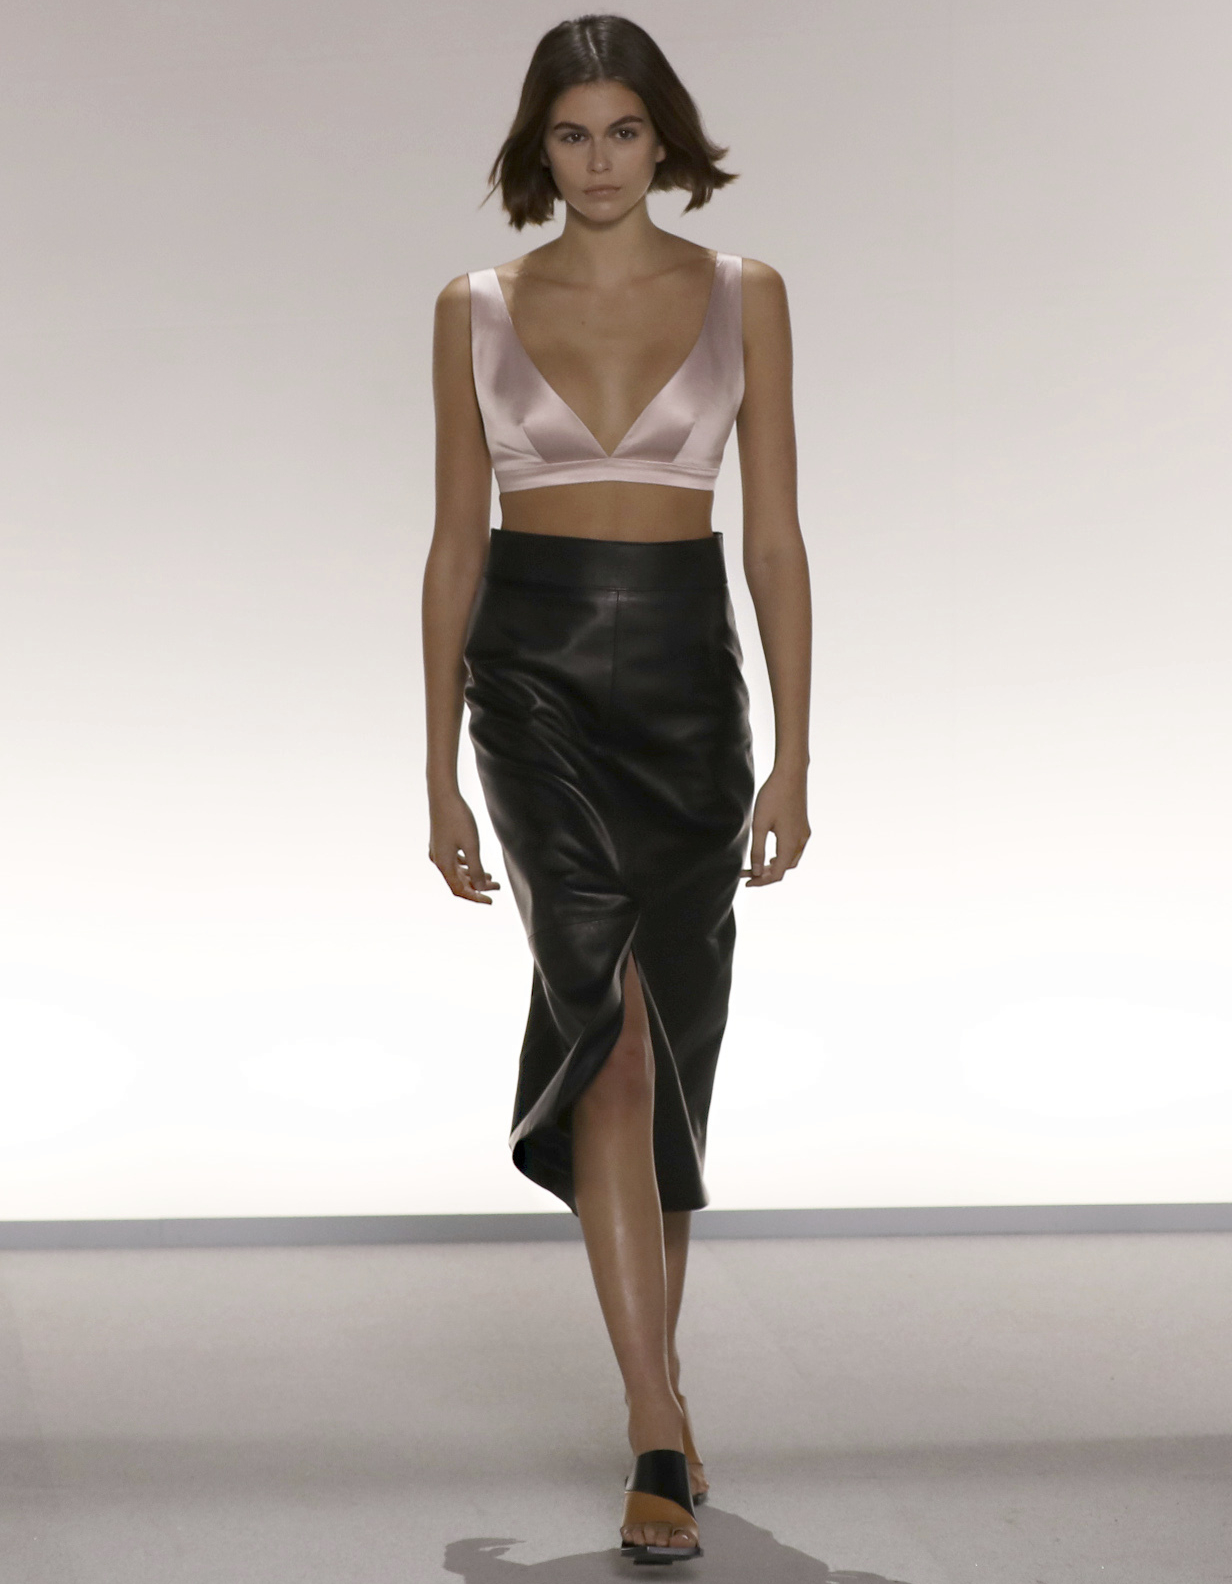 H Kaia Gerber στο σόου του Givenchy